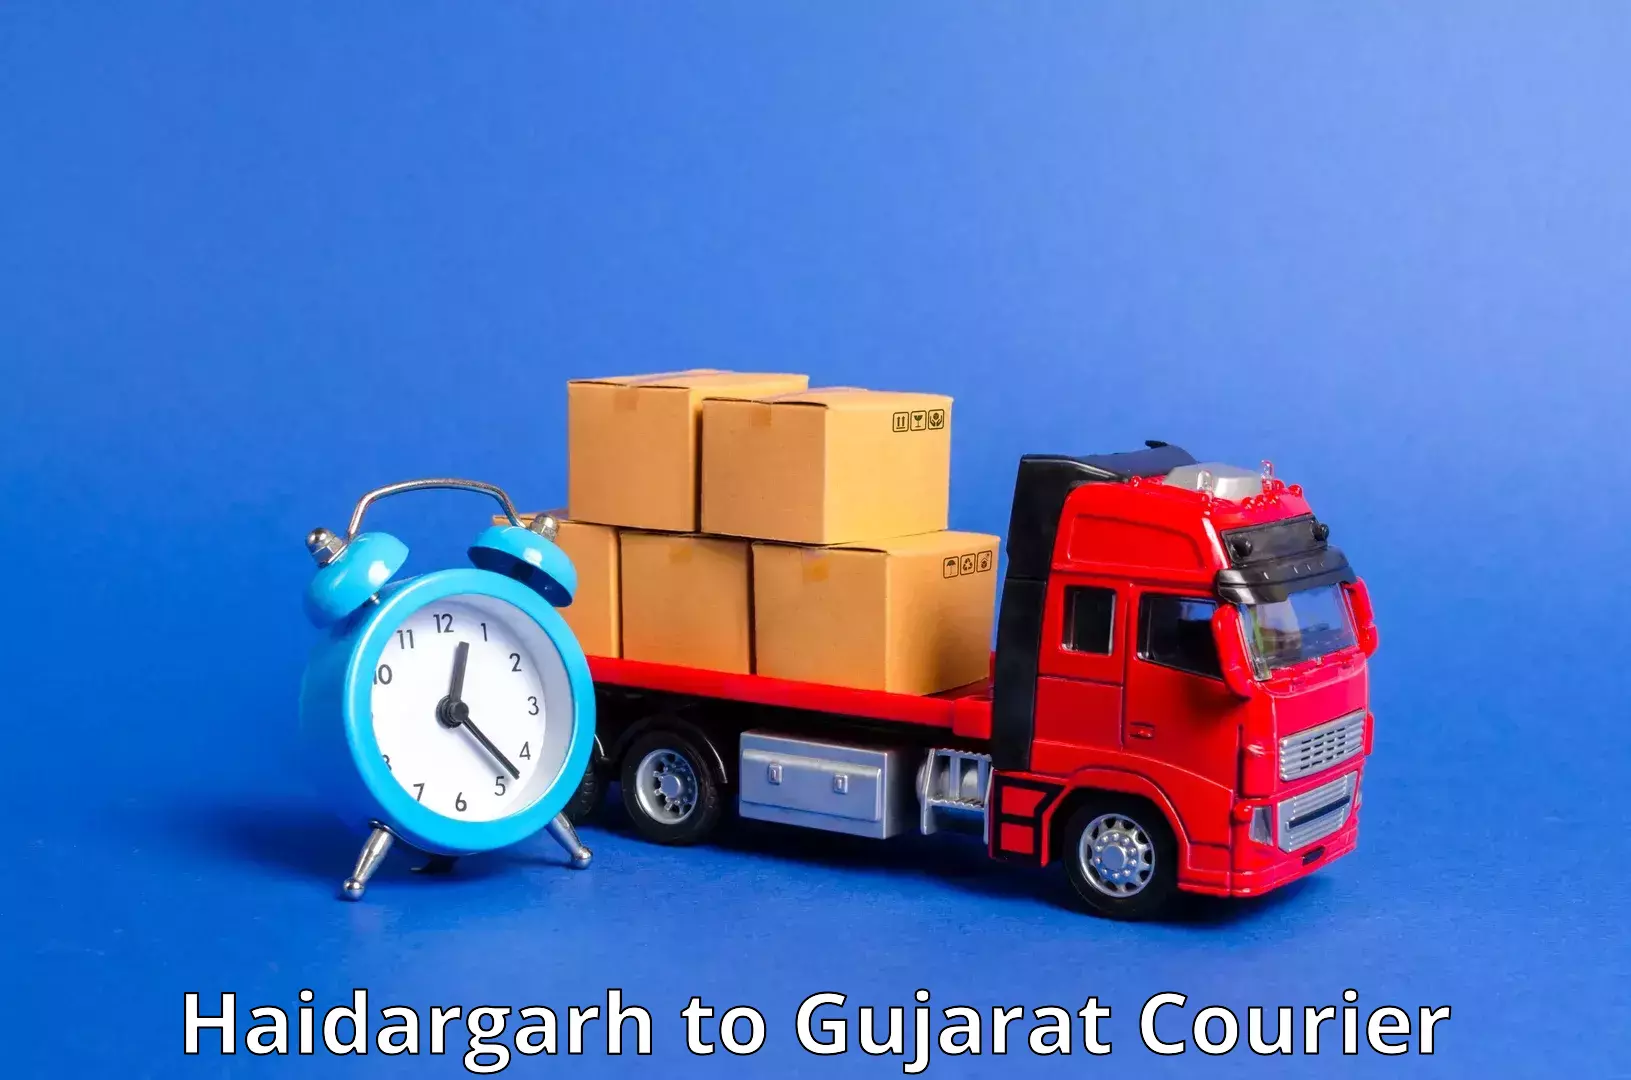 Advanced courier platforms Haidargarh to Bavla